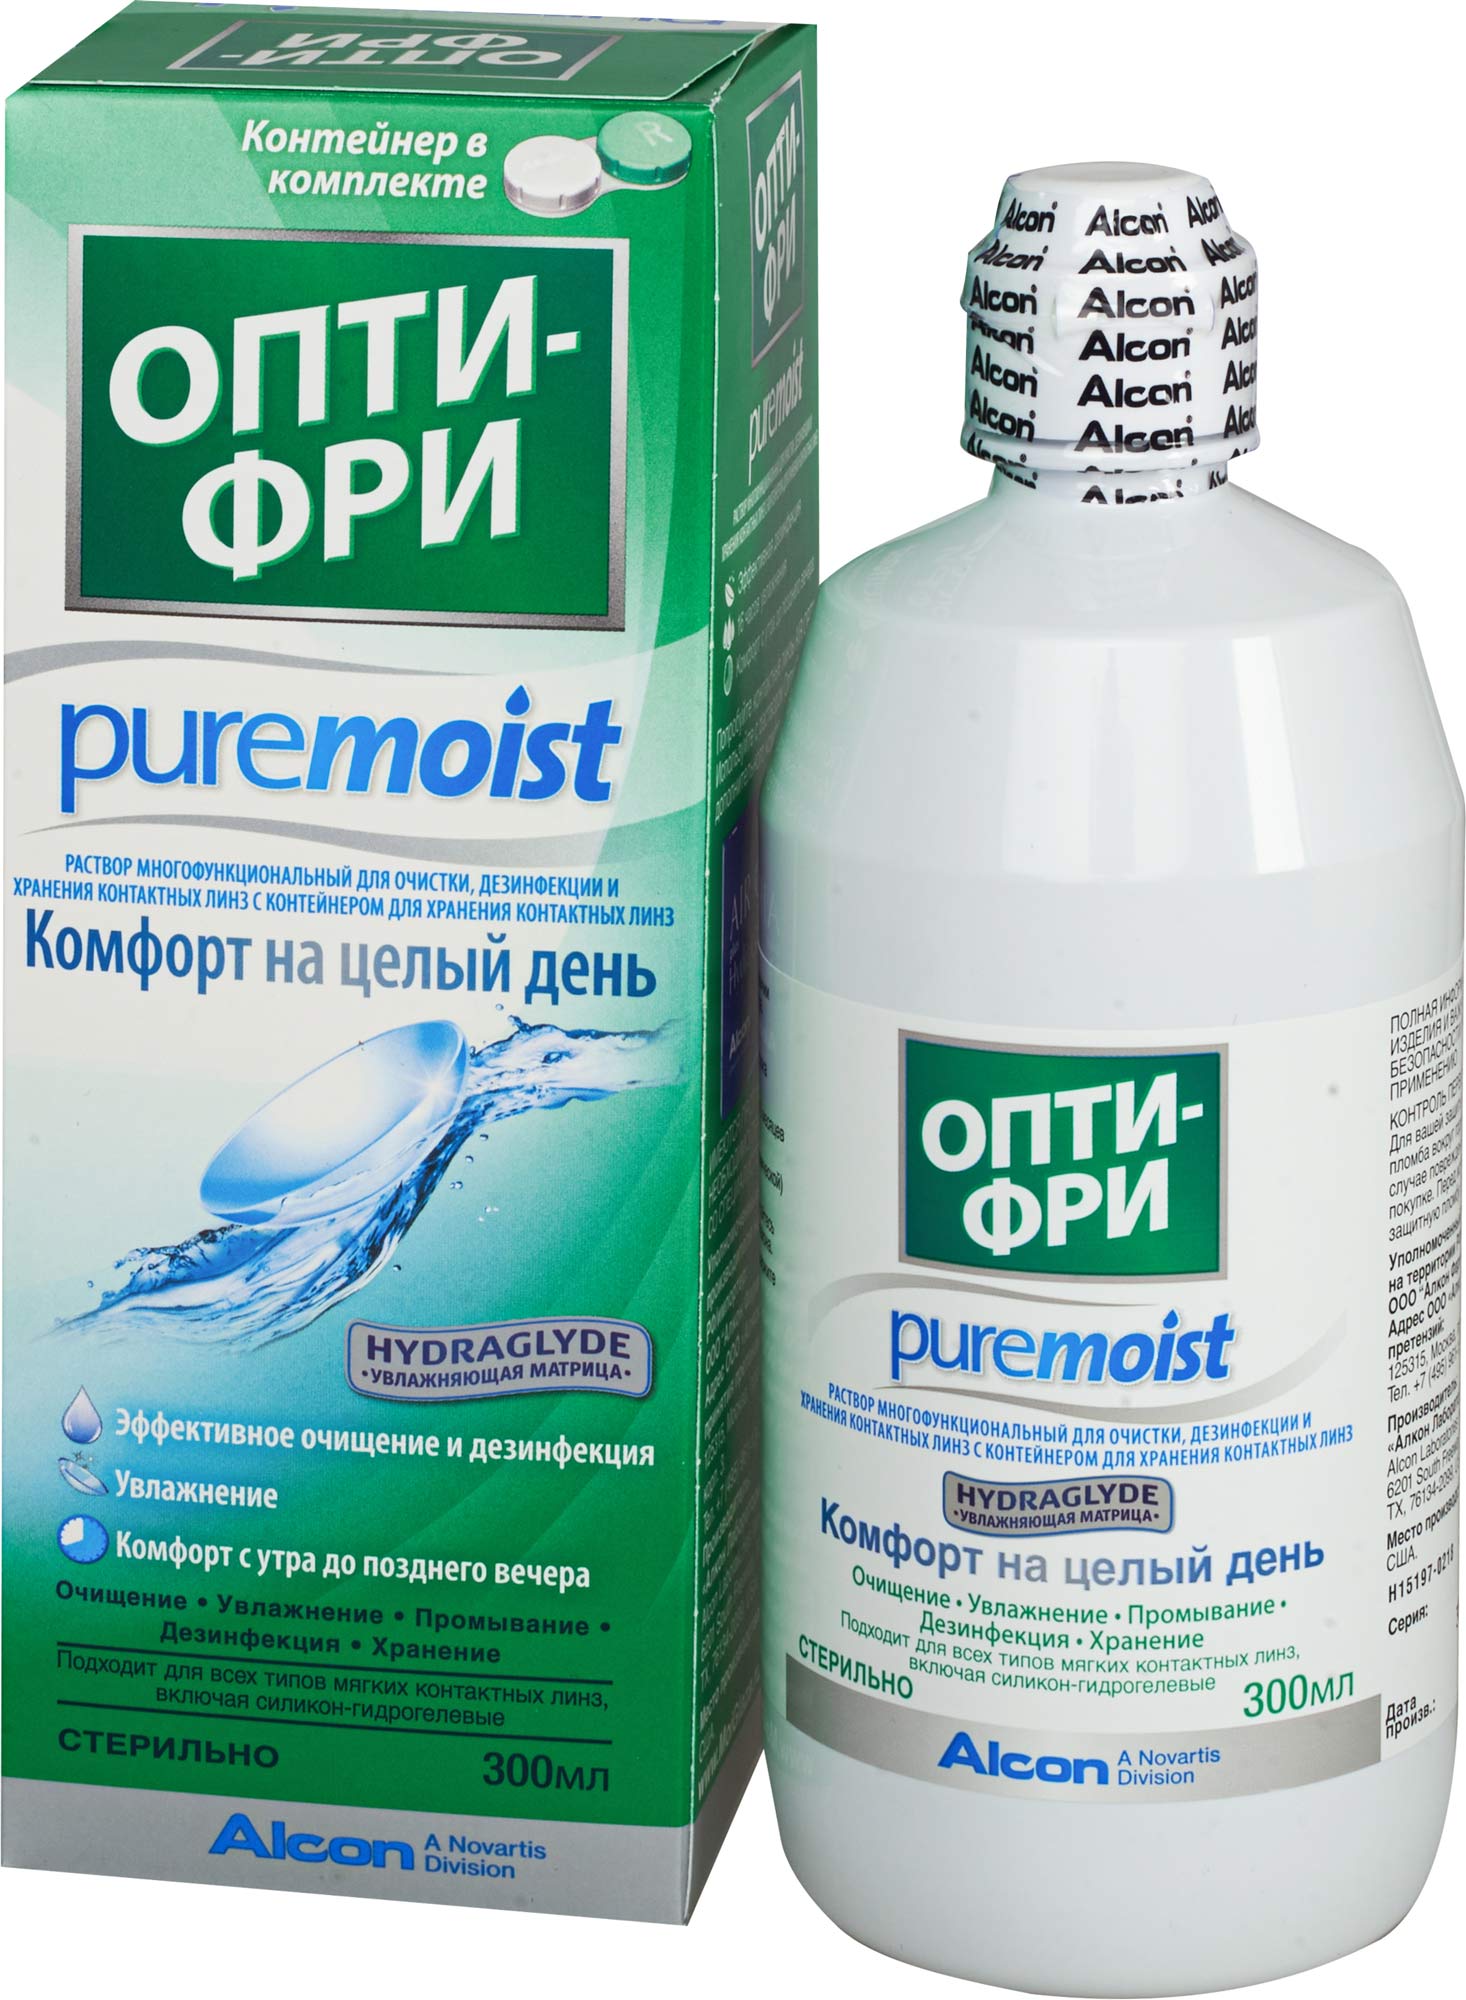 Опти. Opti free Pure moist. Жидкость для линз Опти фри Pure moist. Опти-фри PUREMOIST 300мл. Раствор для линз Opti free Pure moist 300 мл.